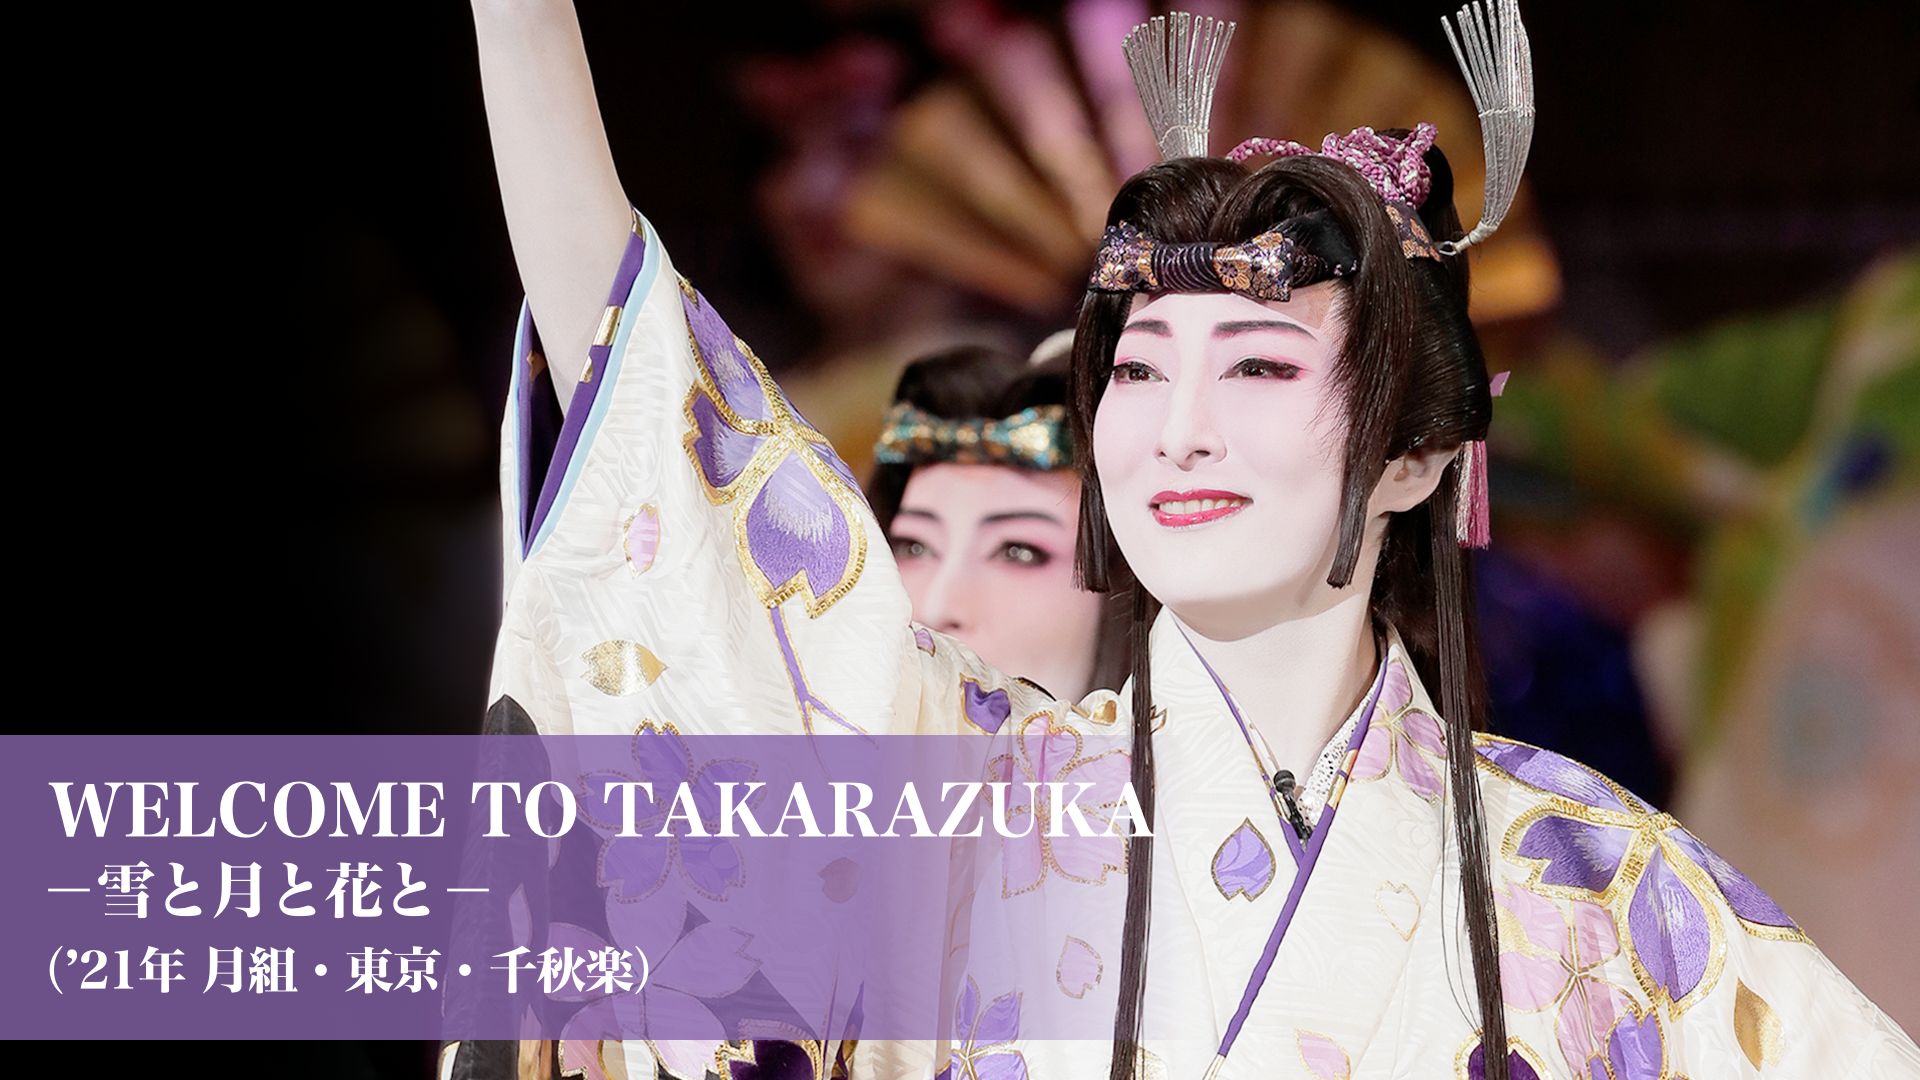 WELCOME TO TAKARAZUKA -雪と月と花と-(’21年月組・東京・千秋楽)